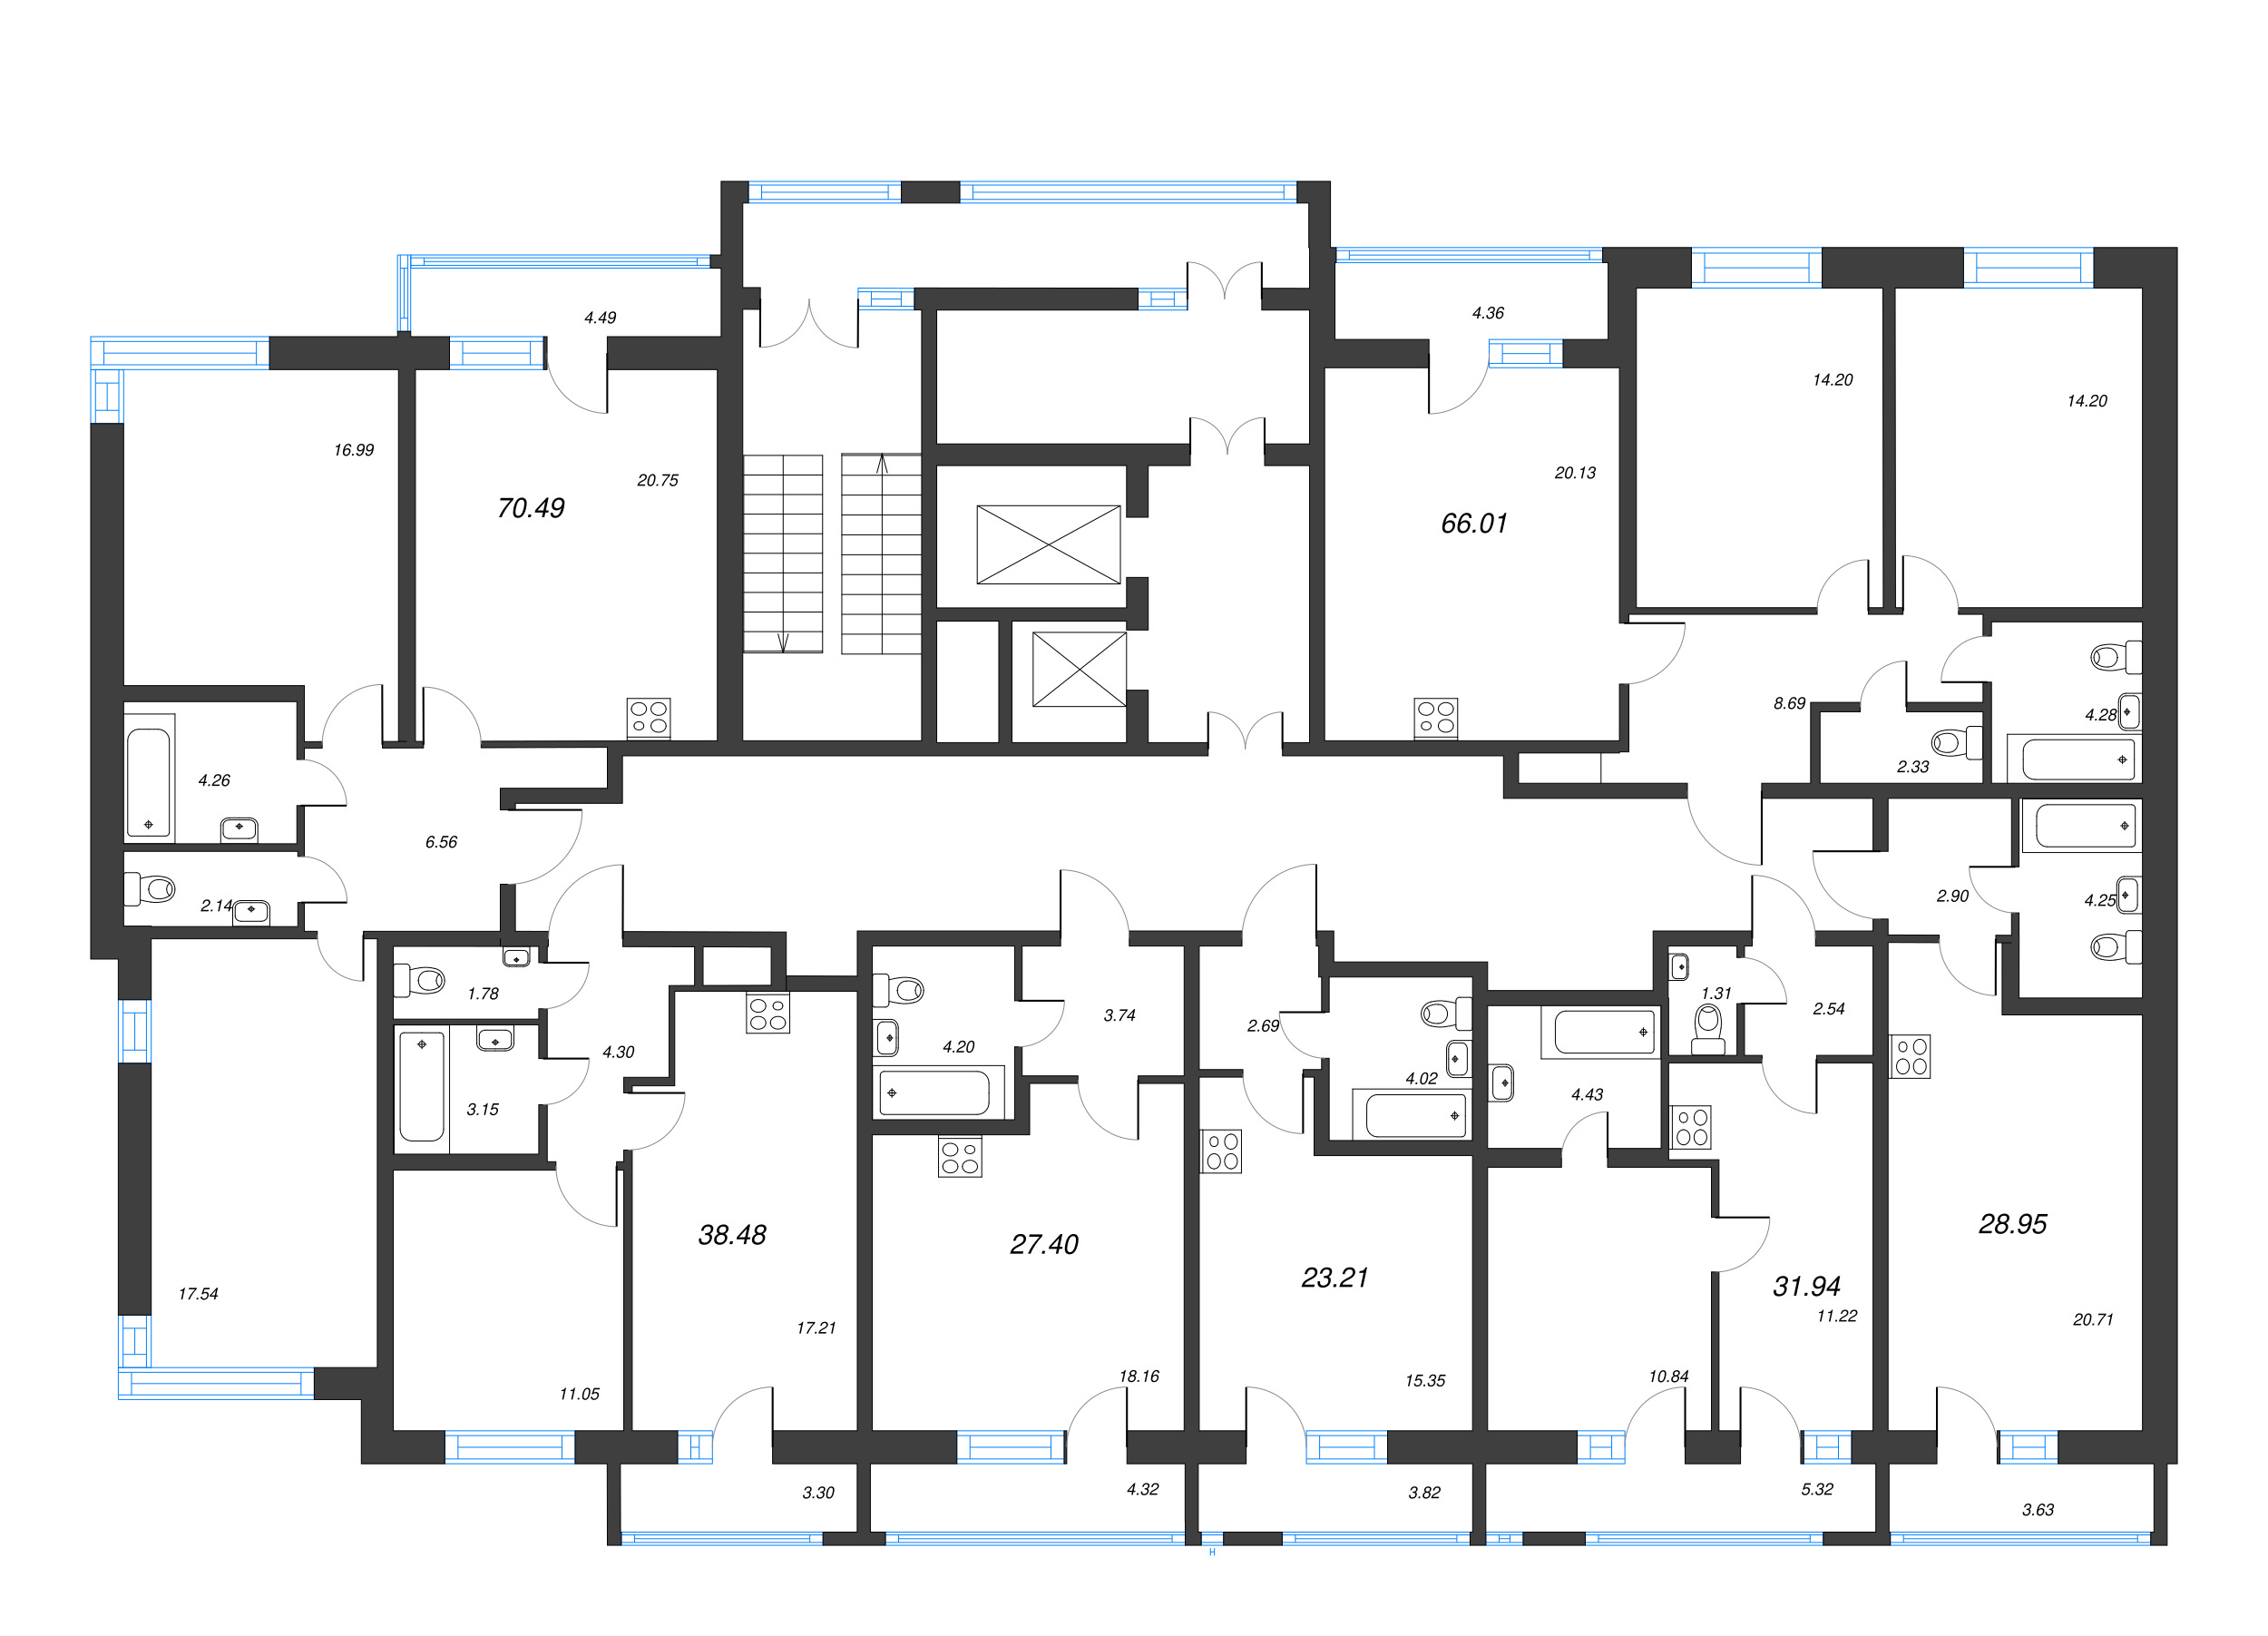 2-комнатная (Евро) квартира, 38.48 м² - планировка этажа